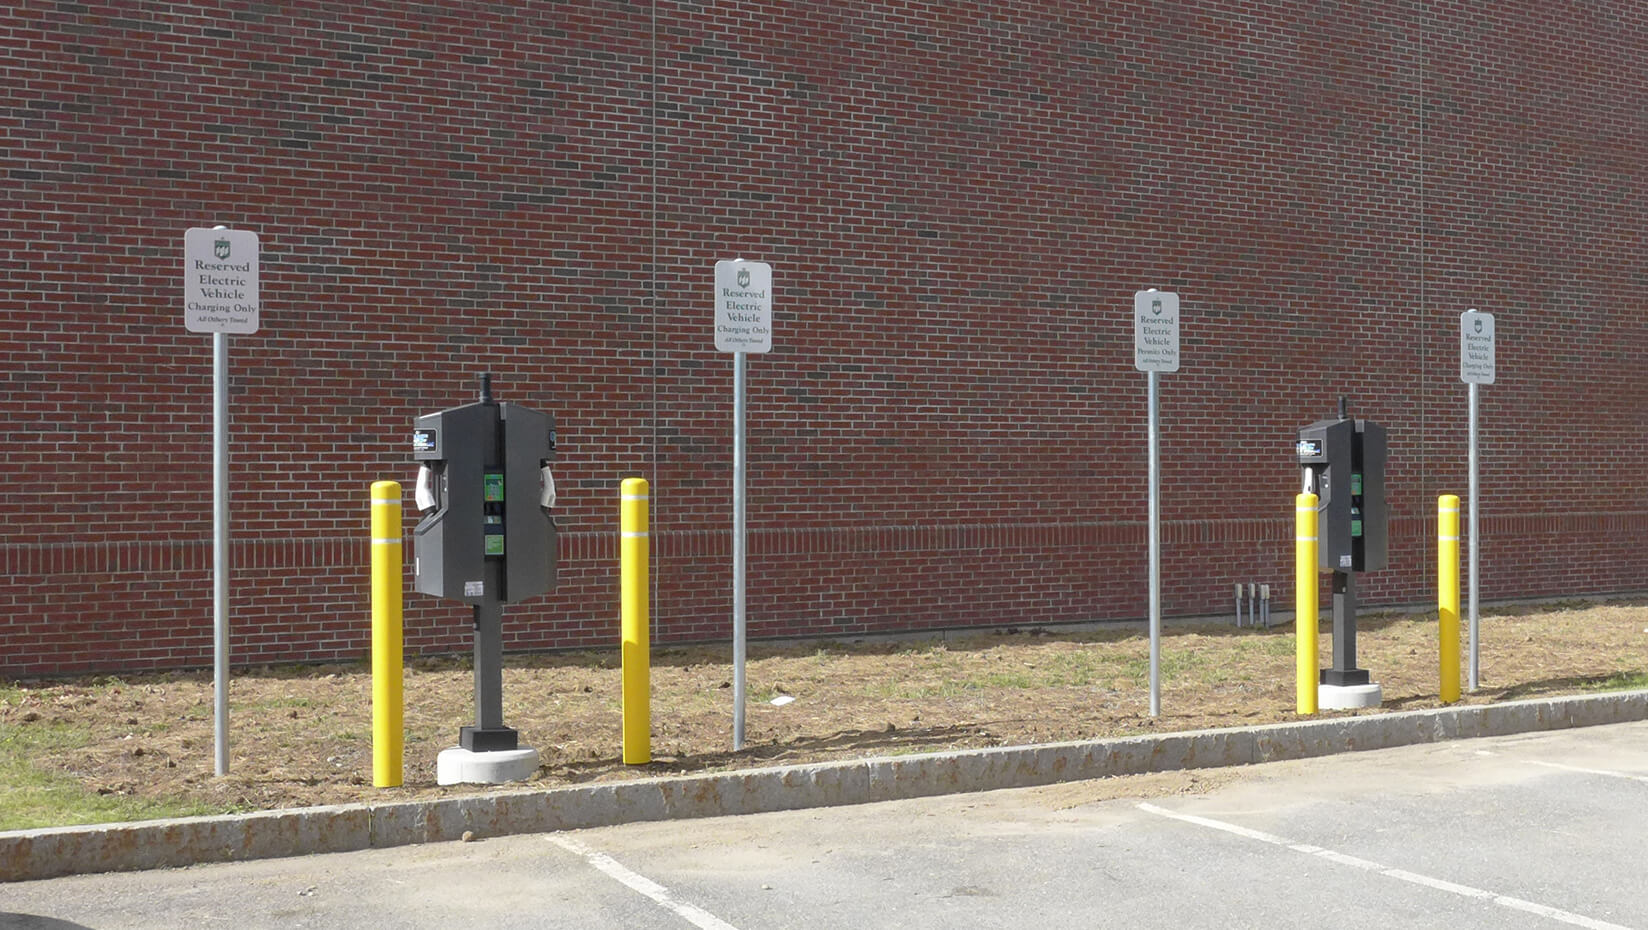 Level 2 vehicle charging stations